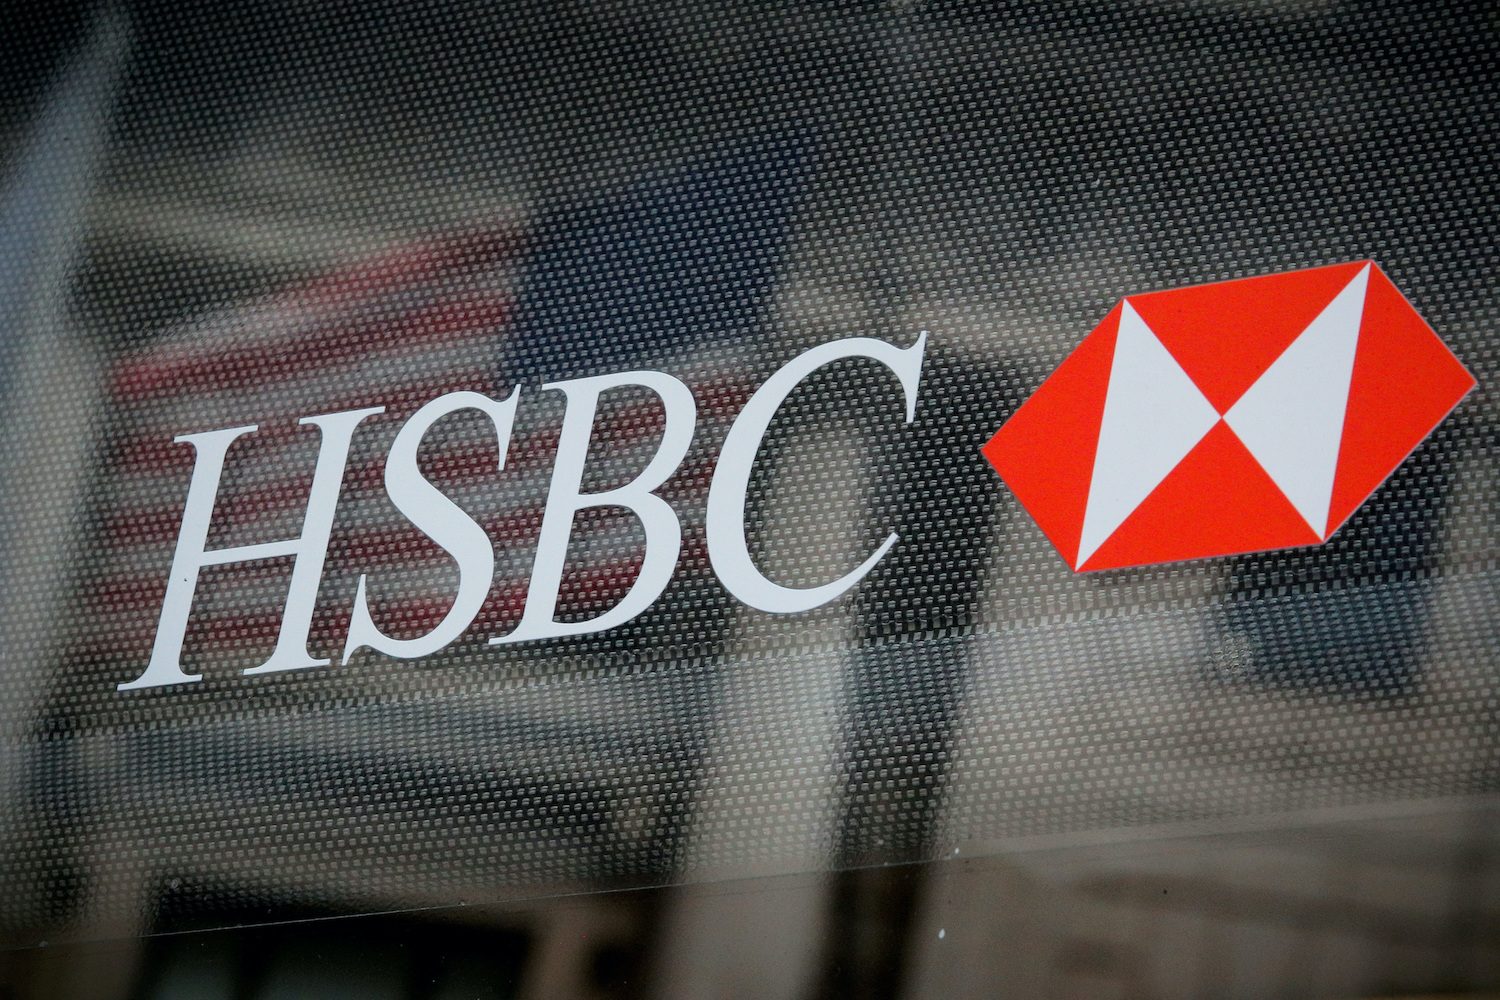 Federal Reserve ends decade-long enforcement action against HSBC